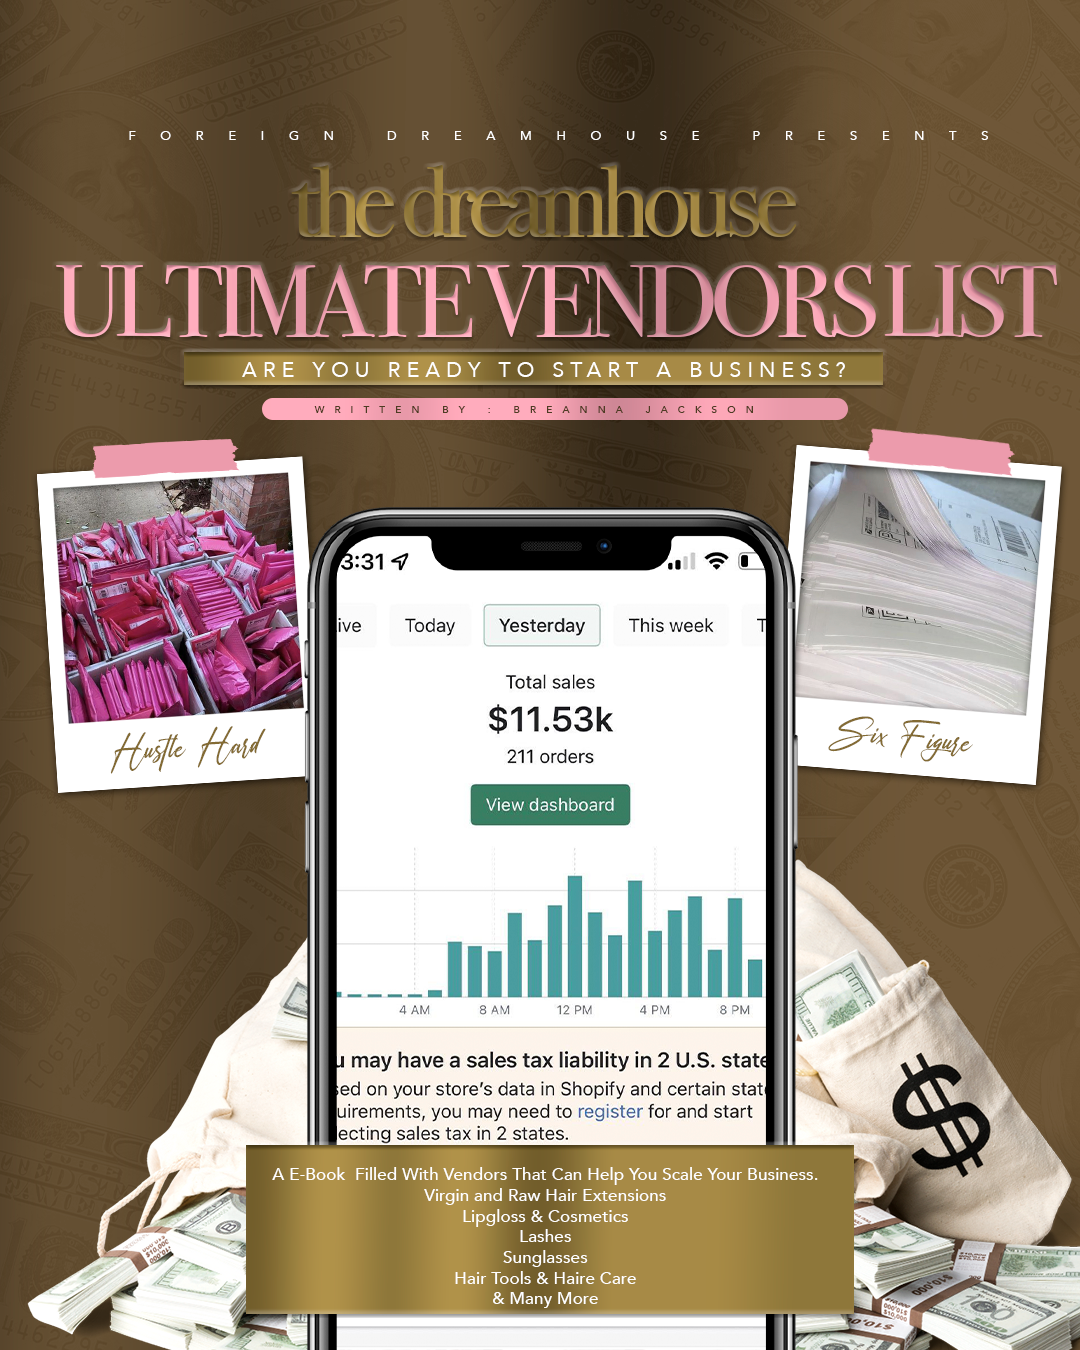 The Dreamhouse Ultimate Vendor List